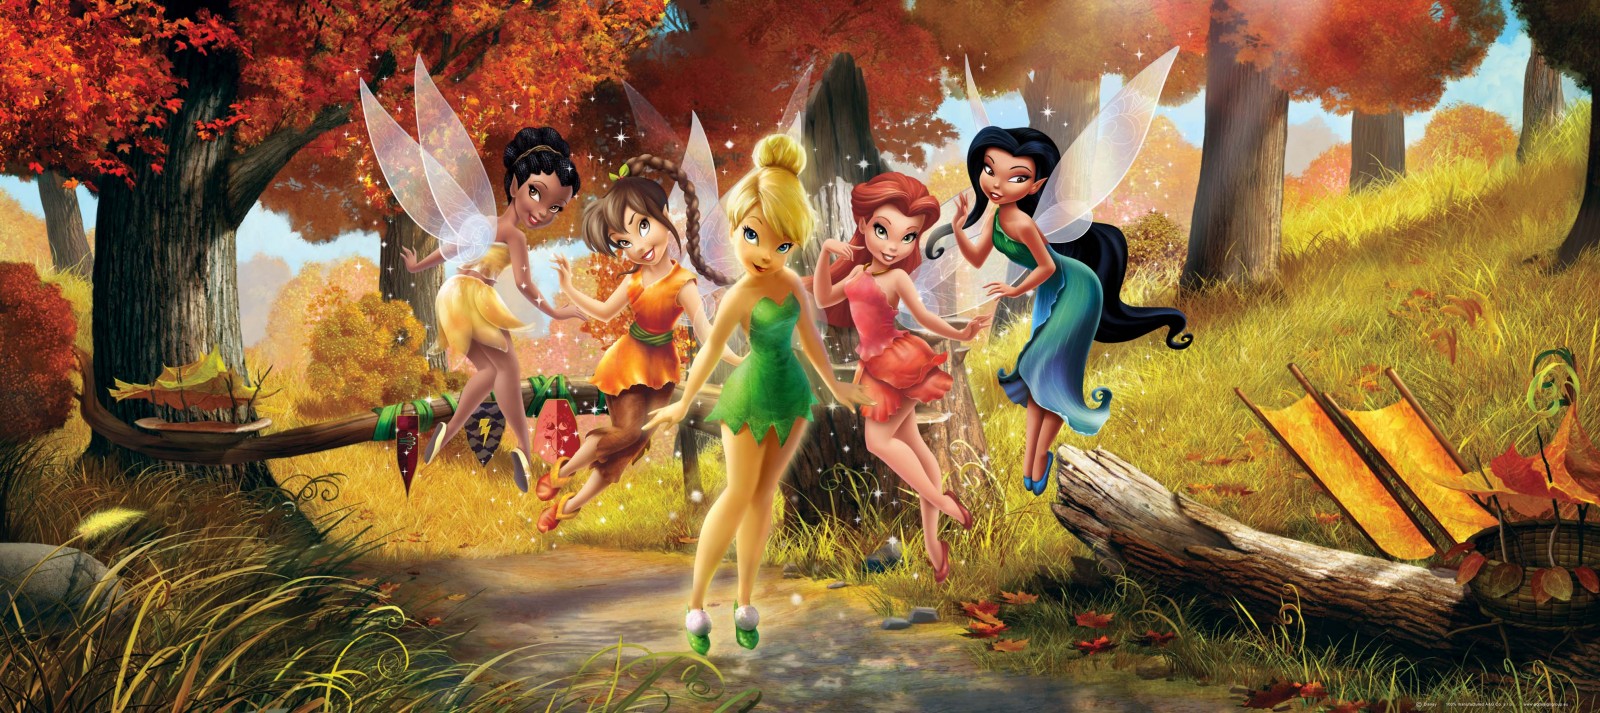 Wall mural wallpaper Disney Tinkerbell and friends fairies fairy ...